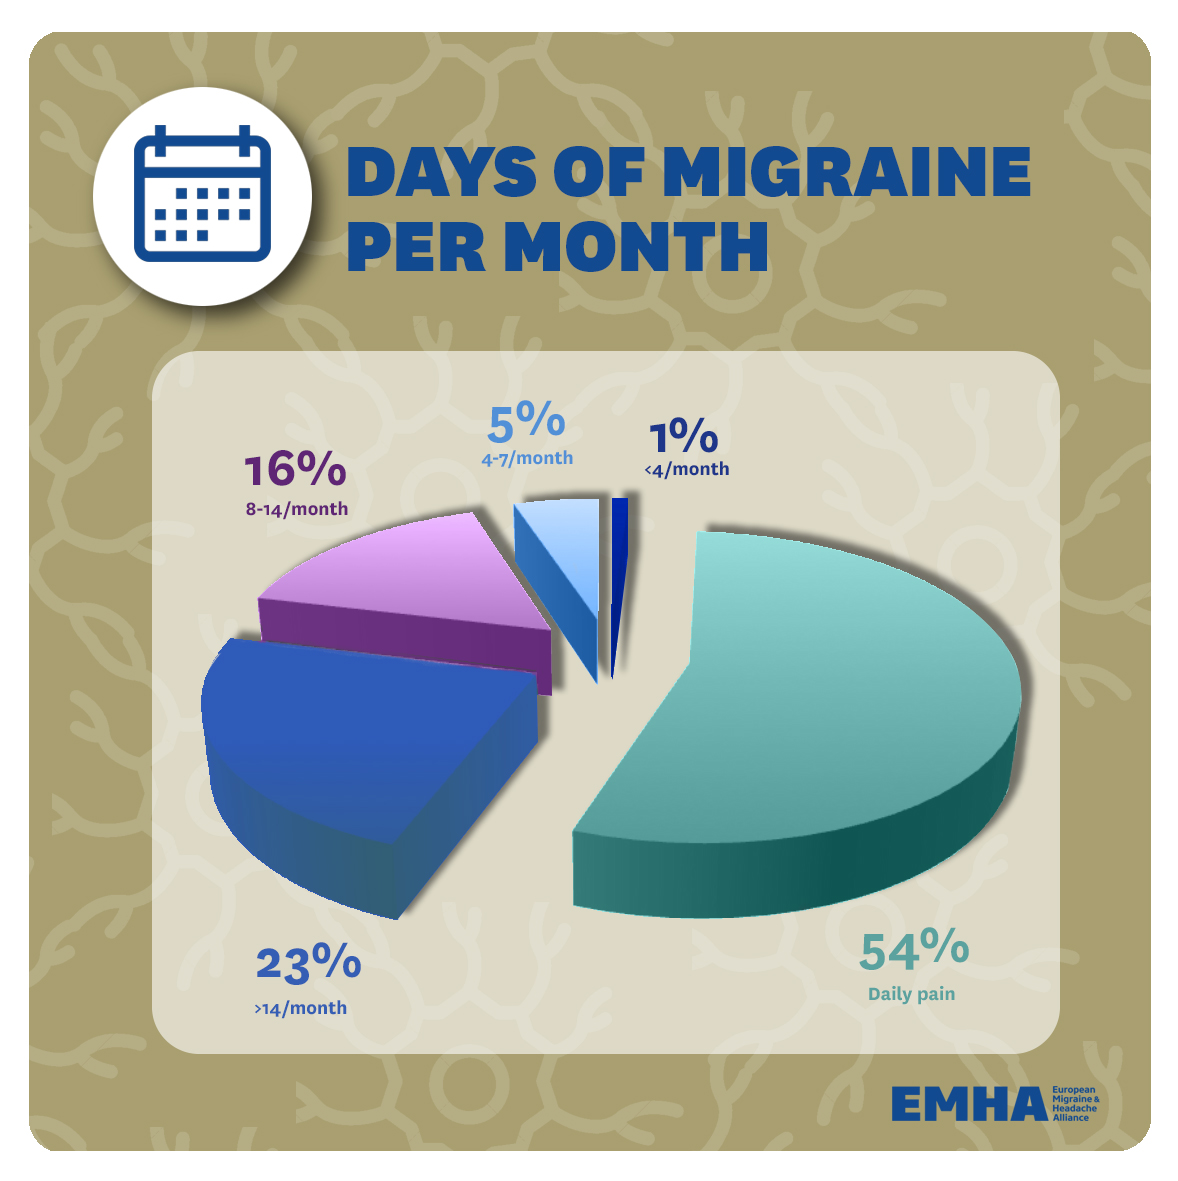 29.-Days-of-migraine-per-month